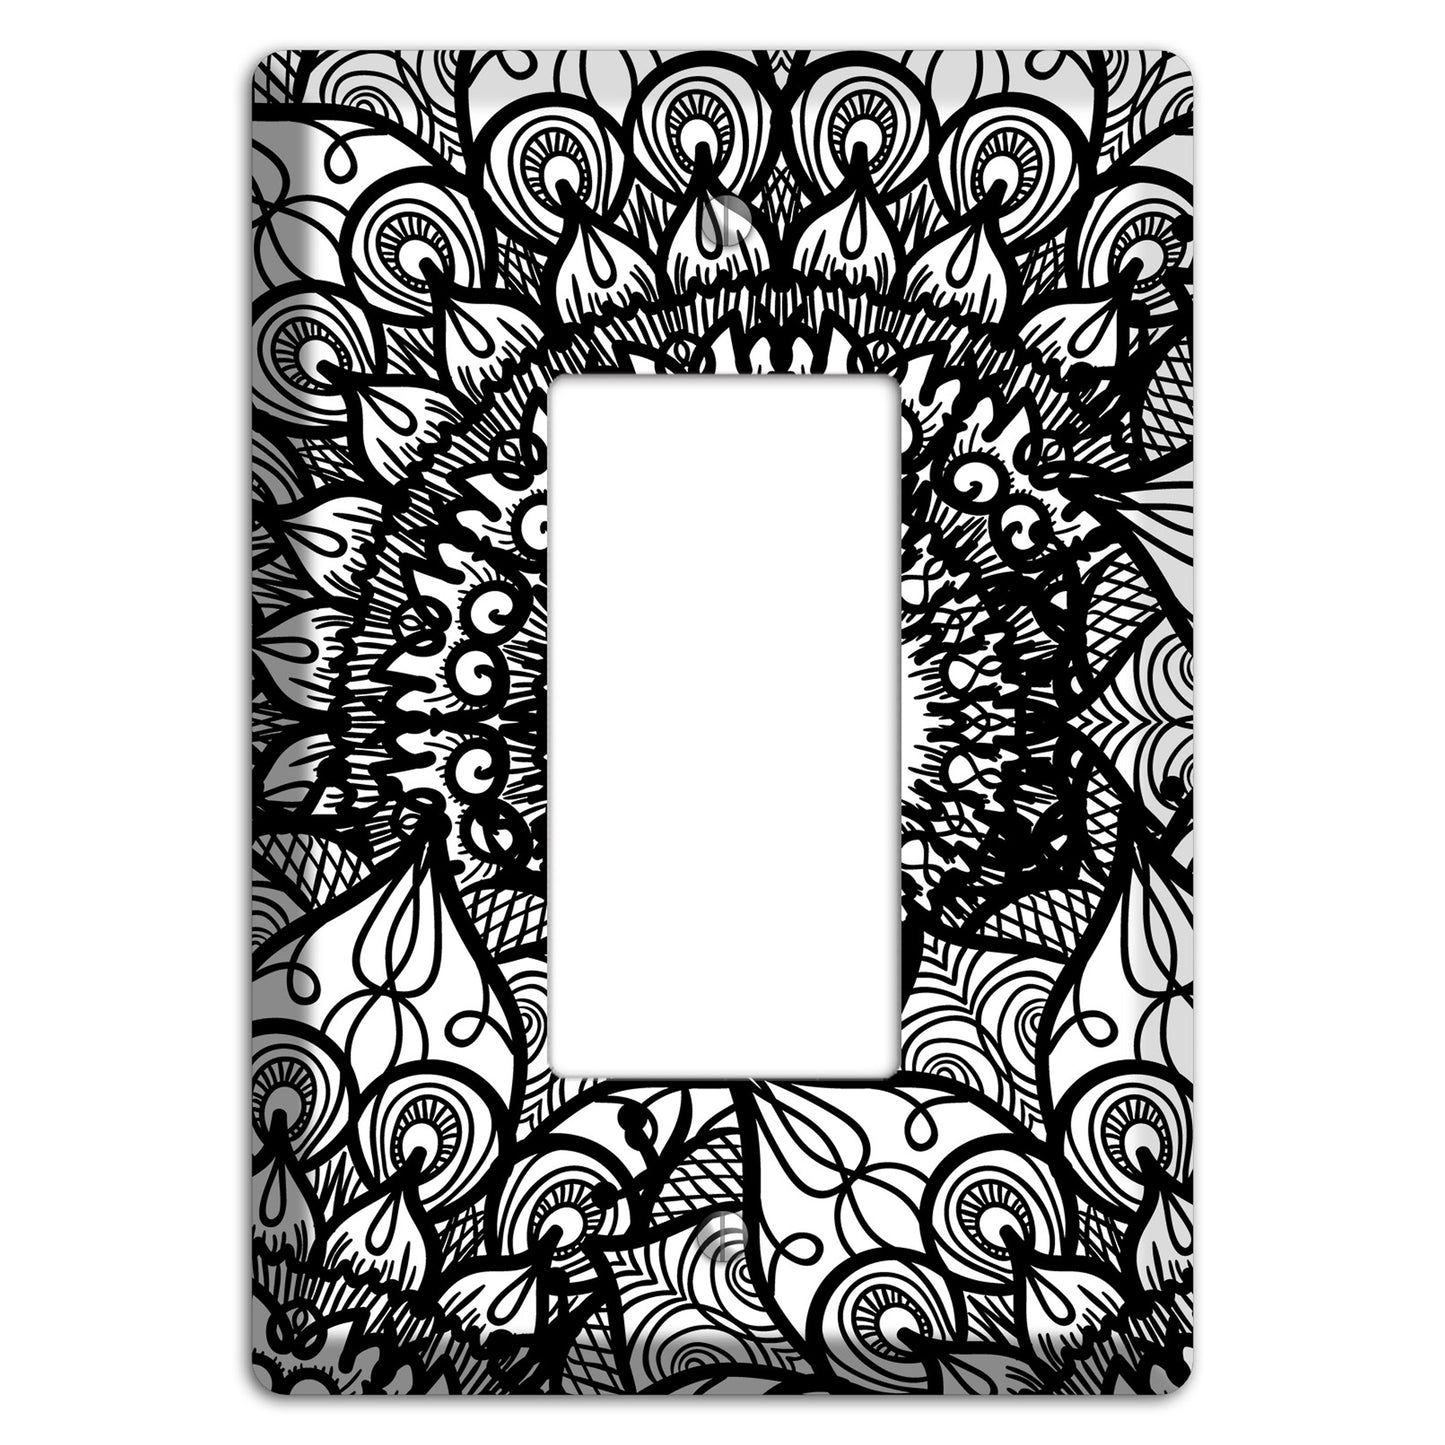 Mandala Black and White Style V Cover Plates Rocker Wallplate